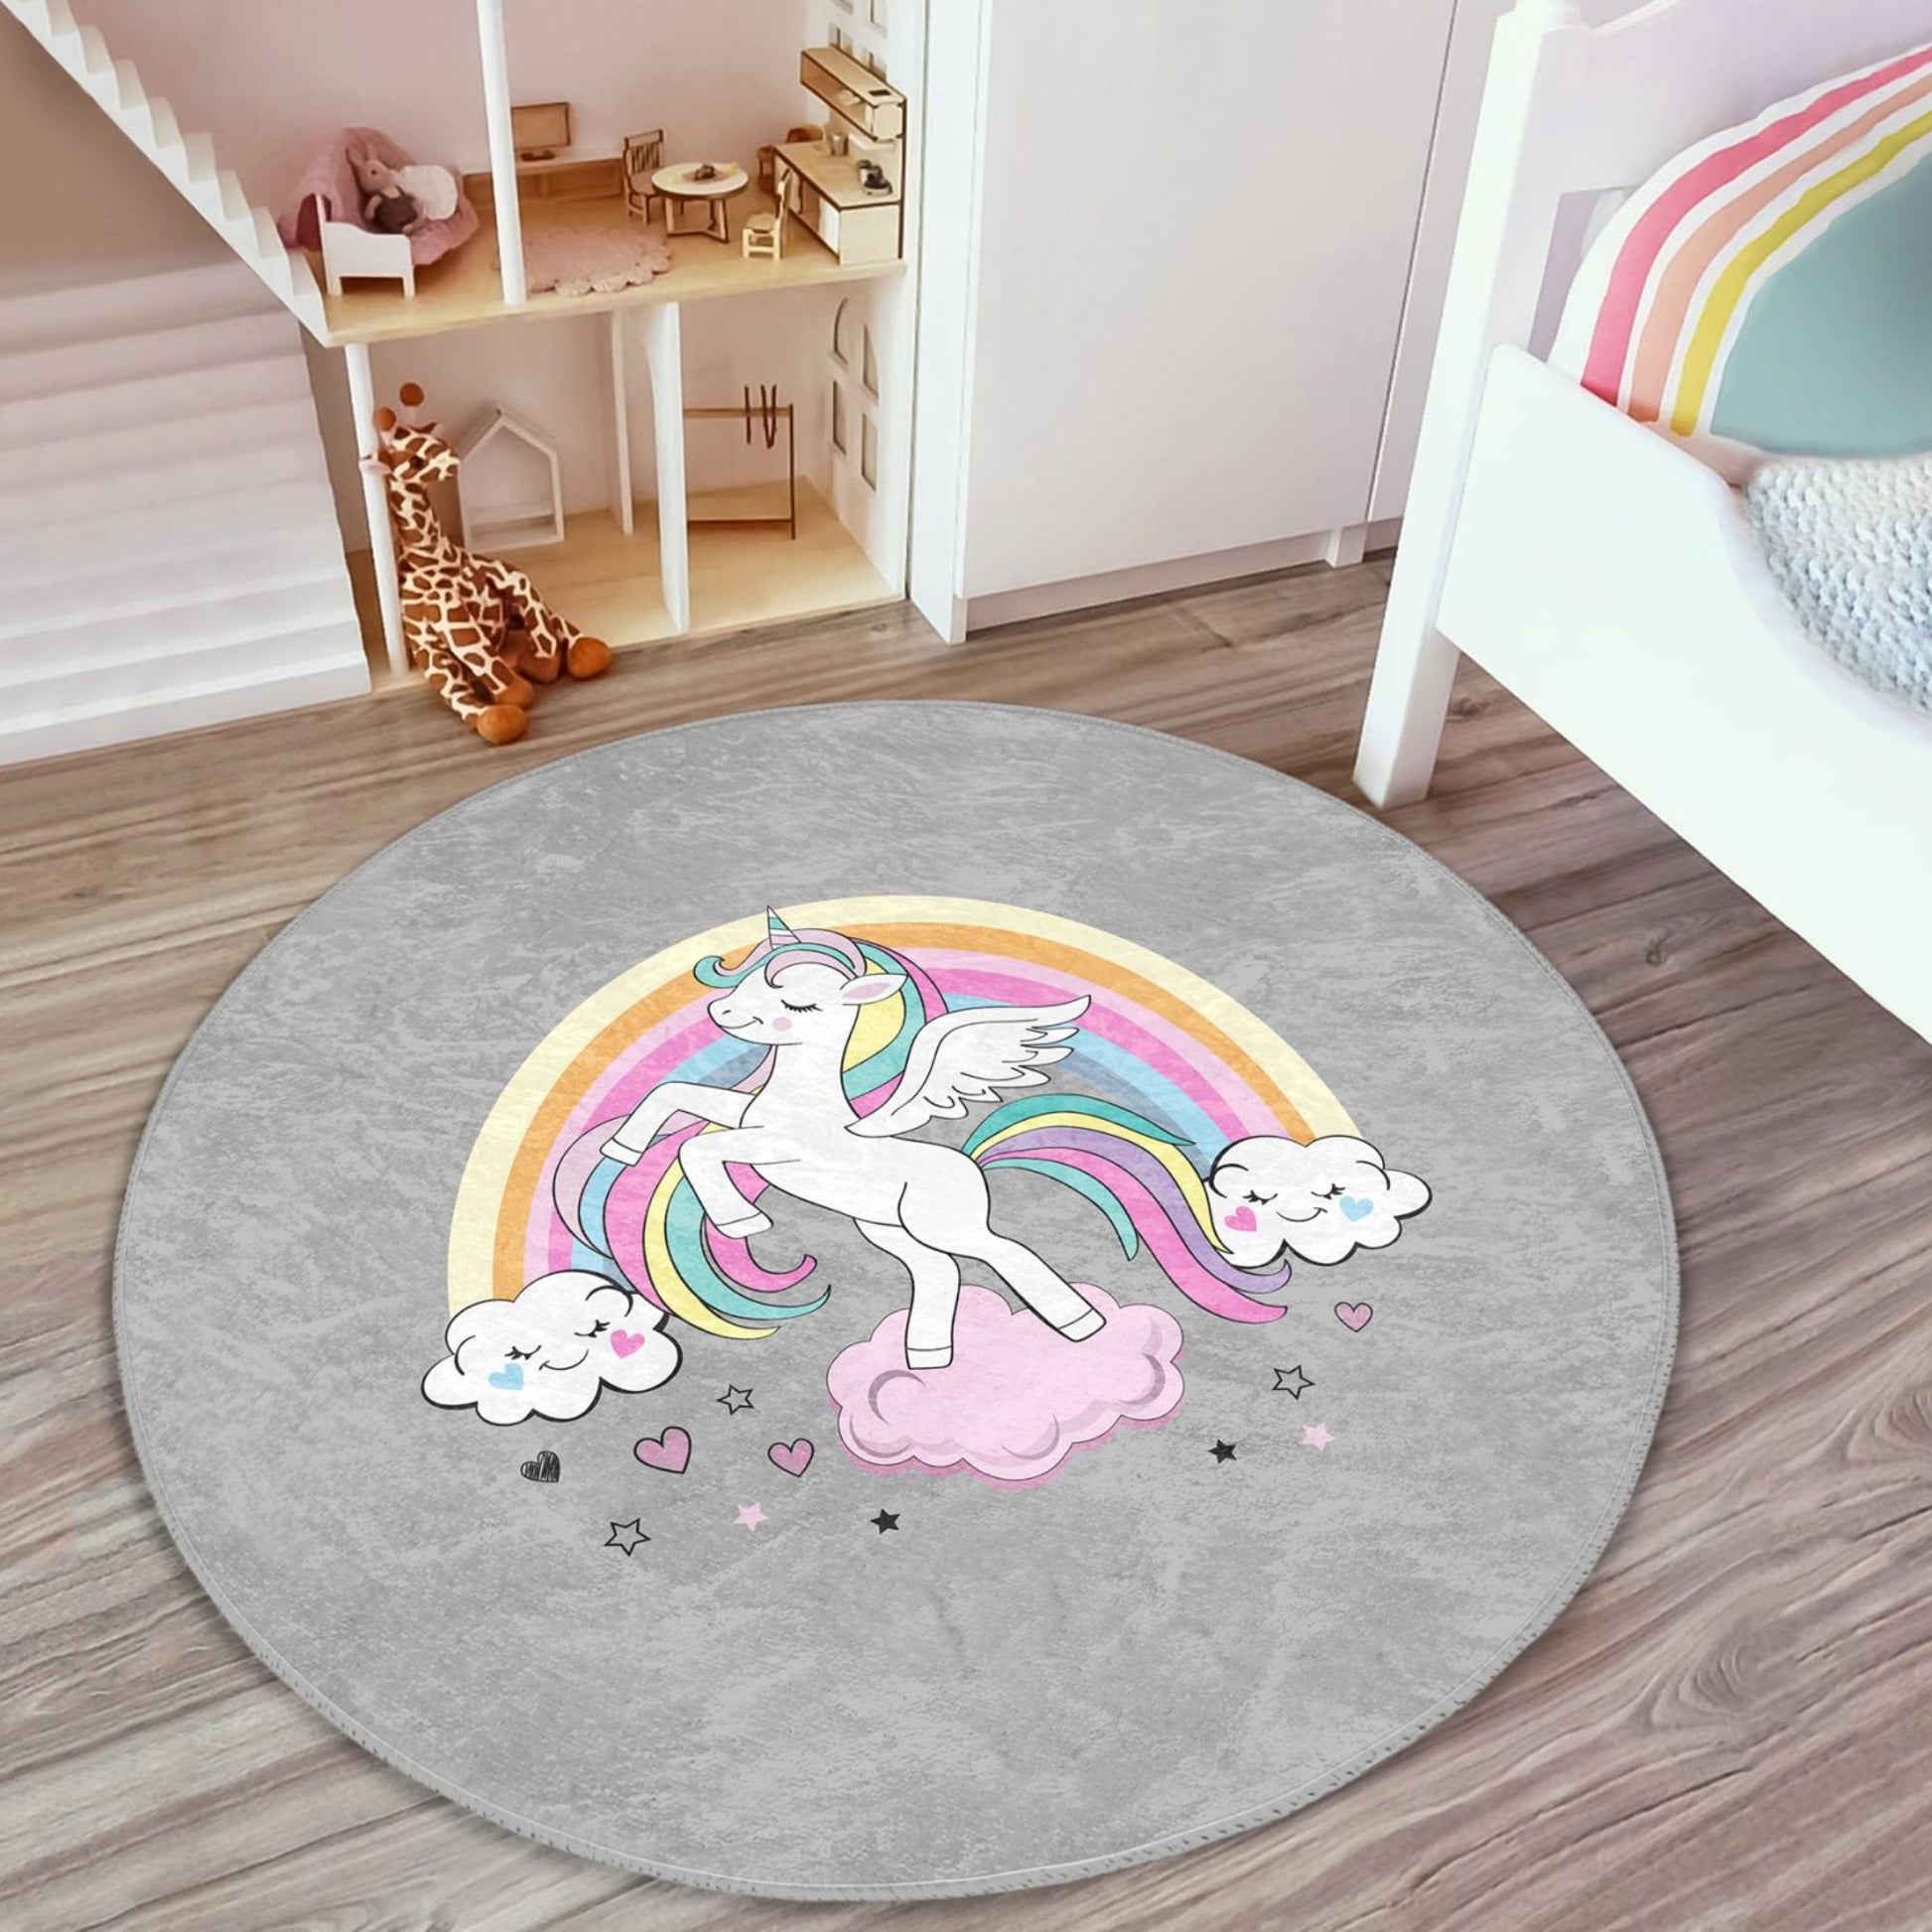 Rug with Playful Unicorn and Rainbow Illustrations